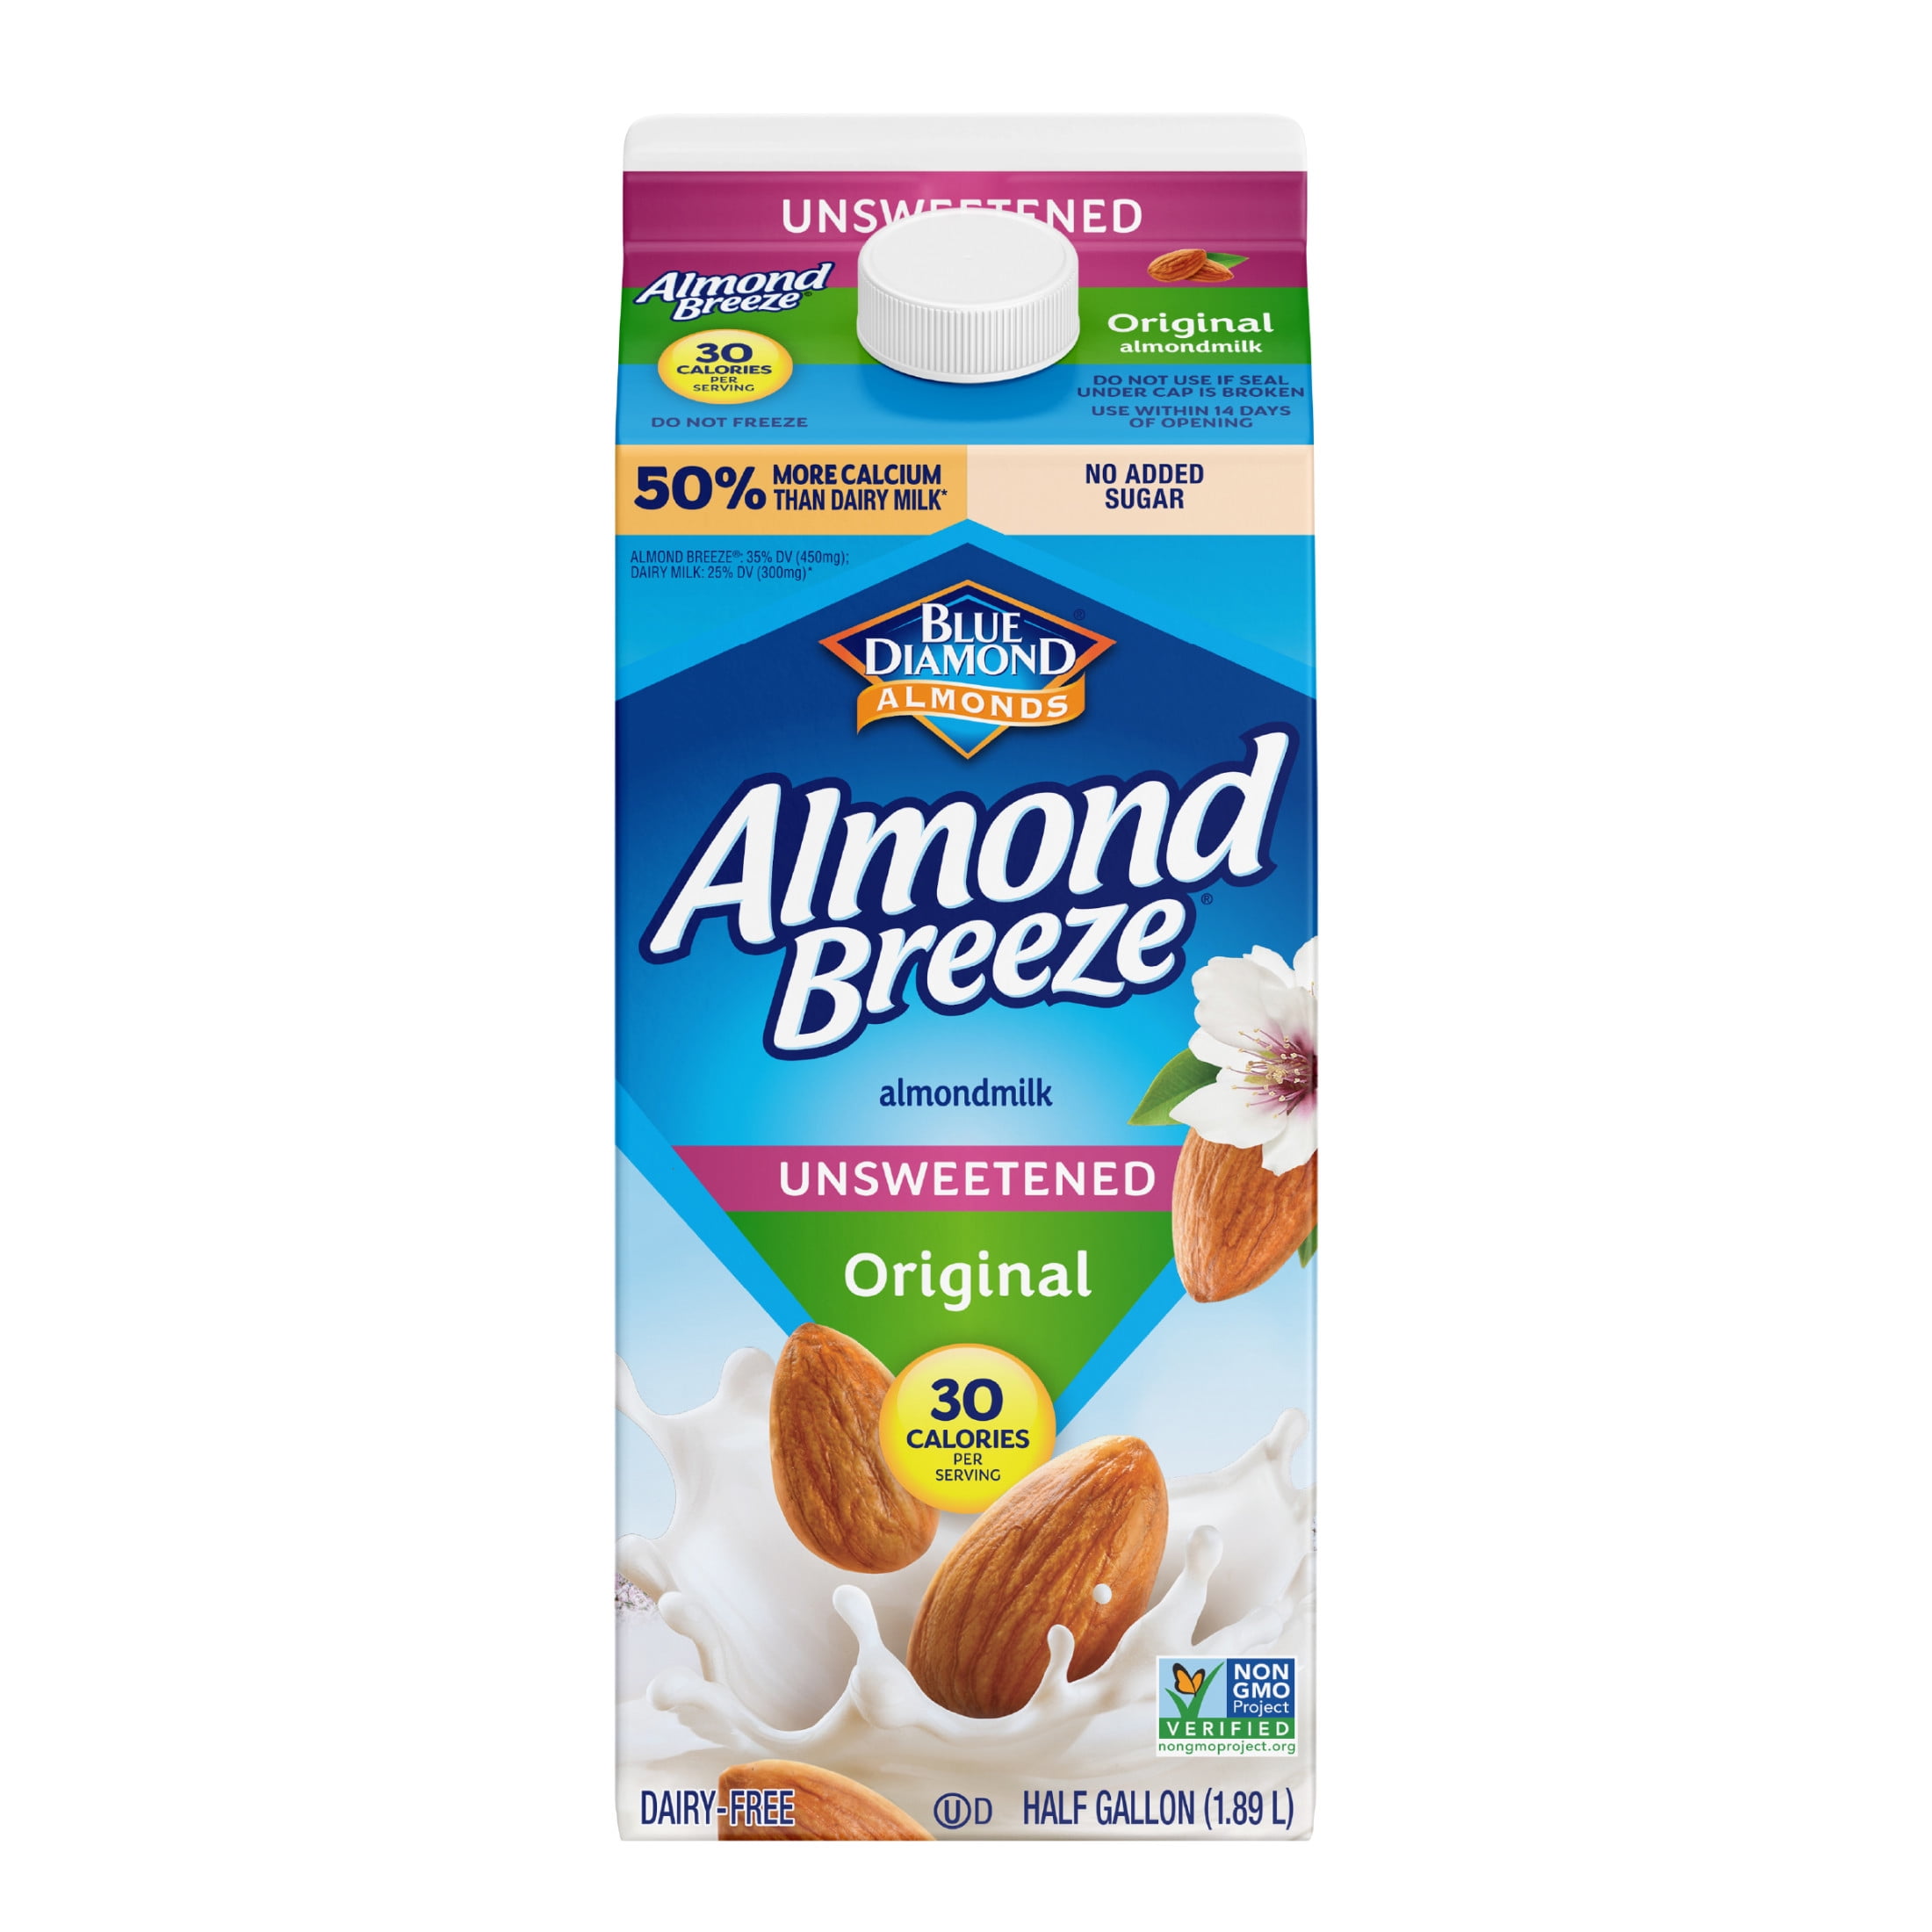 Almond Breeze Unsweetened Original Almondmilk Refrigerated, 64 oz -  Walmart.com